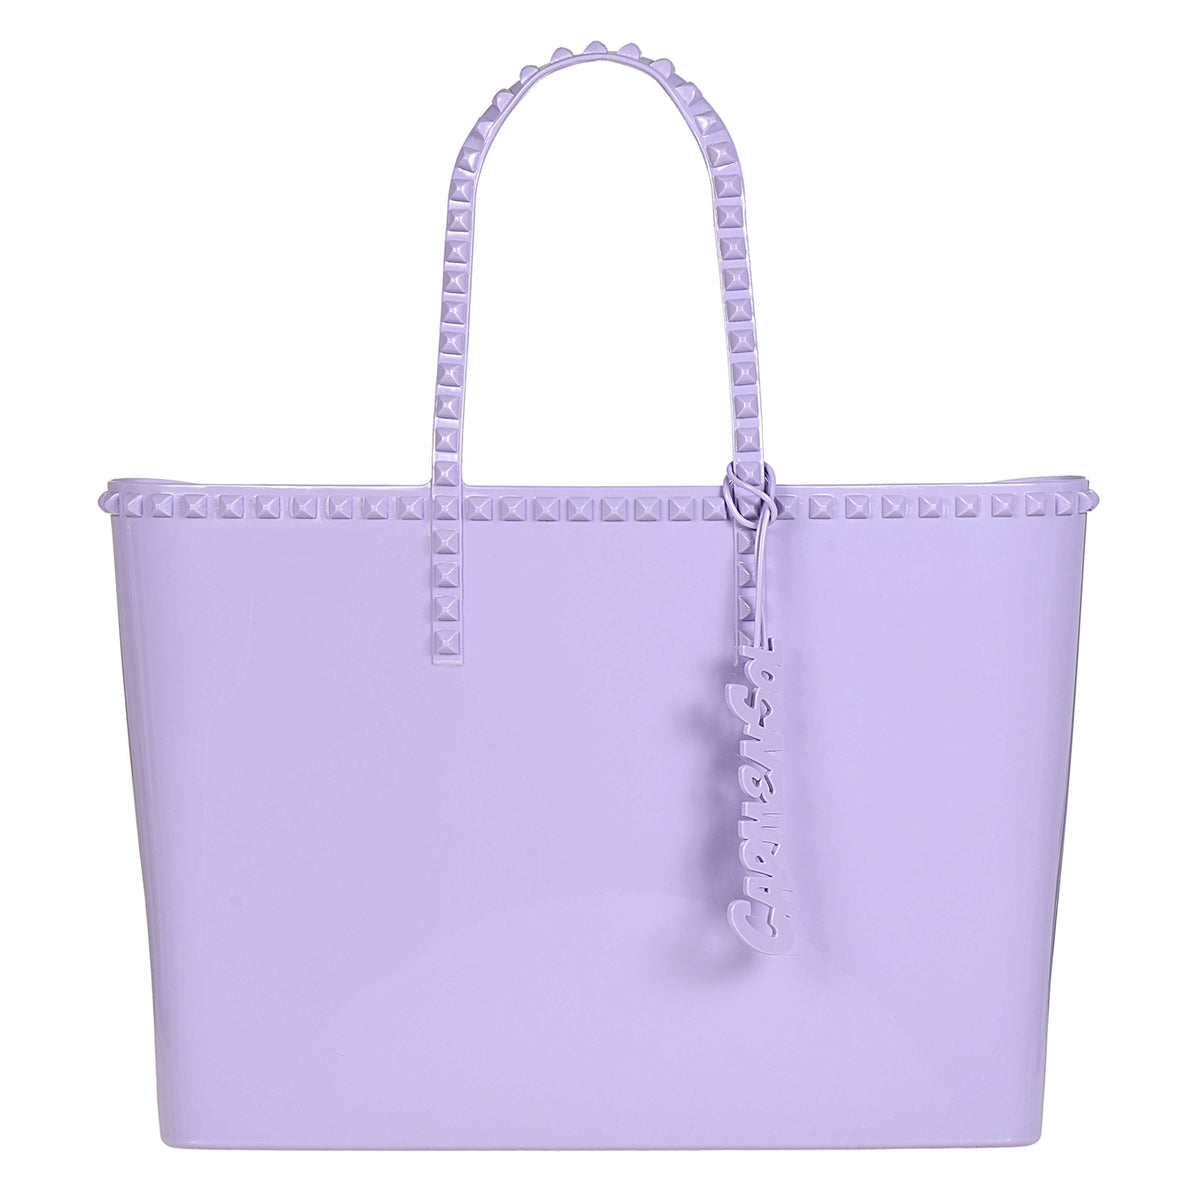 carmen sol Jelly purse, designer tote bags in Violet